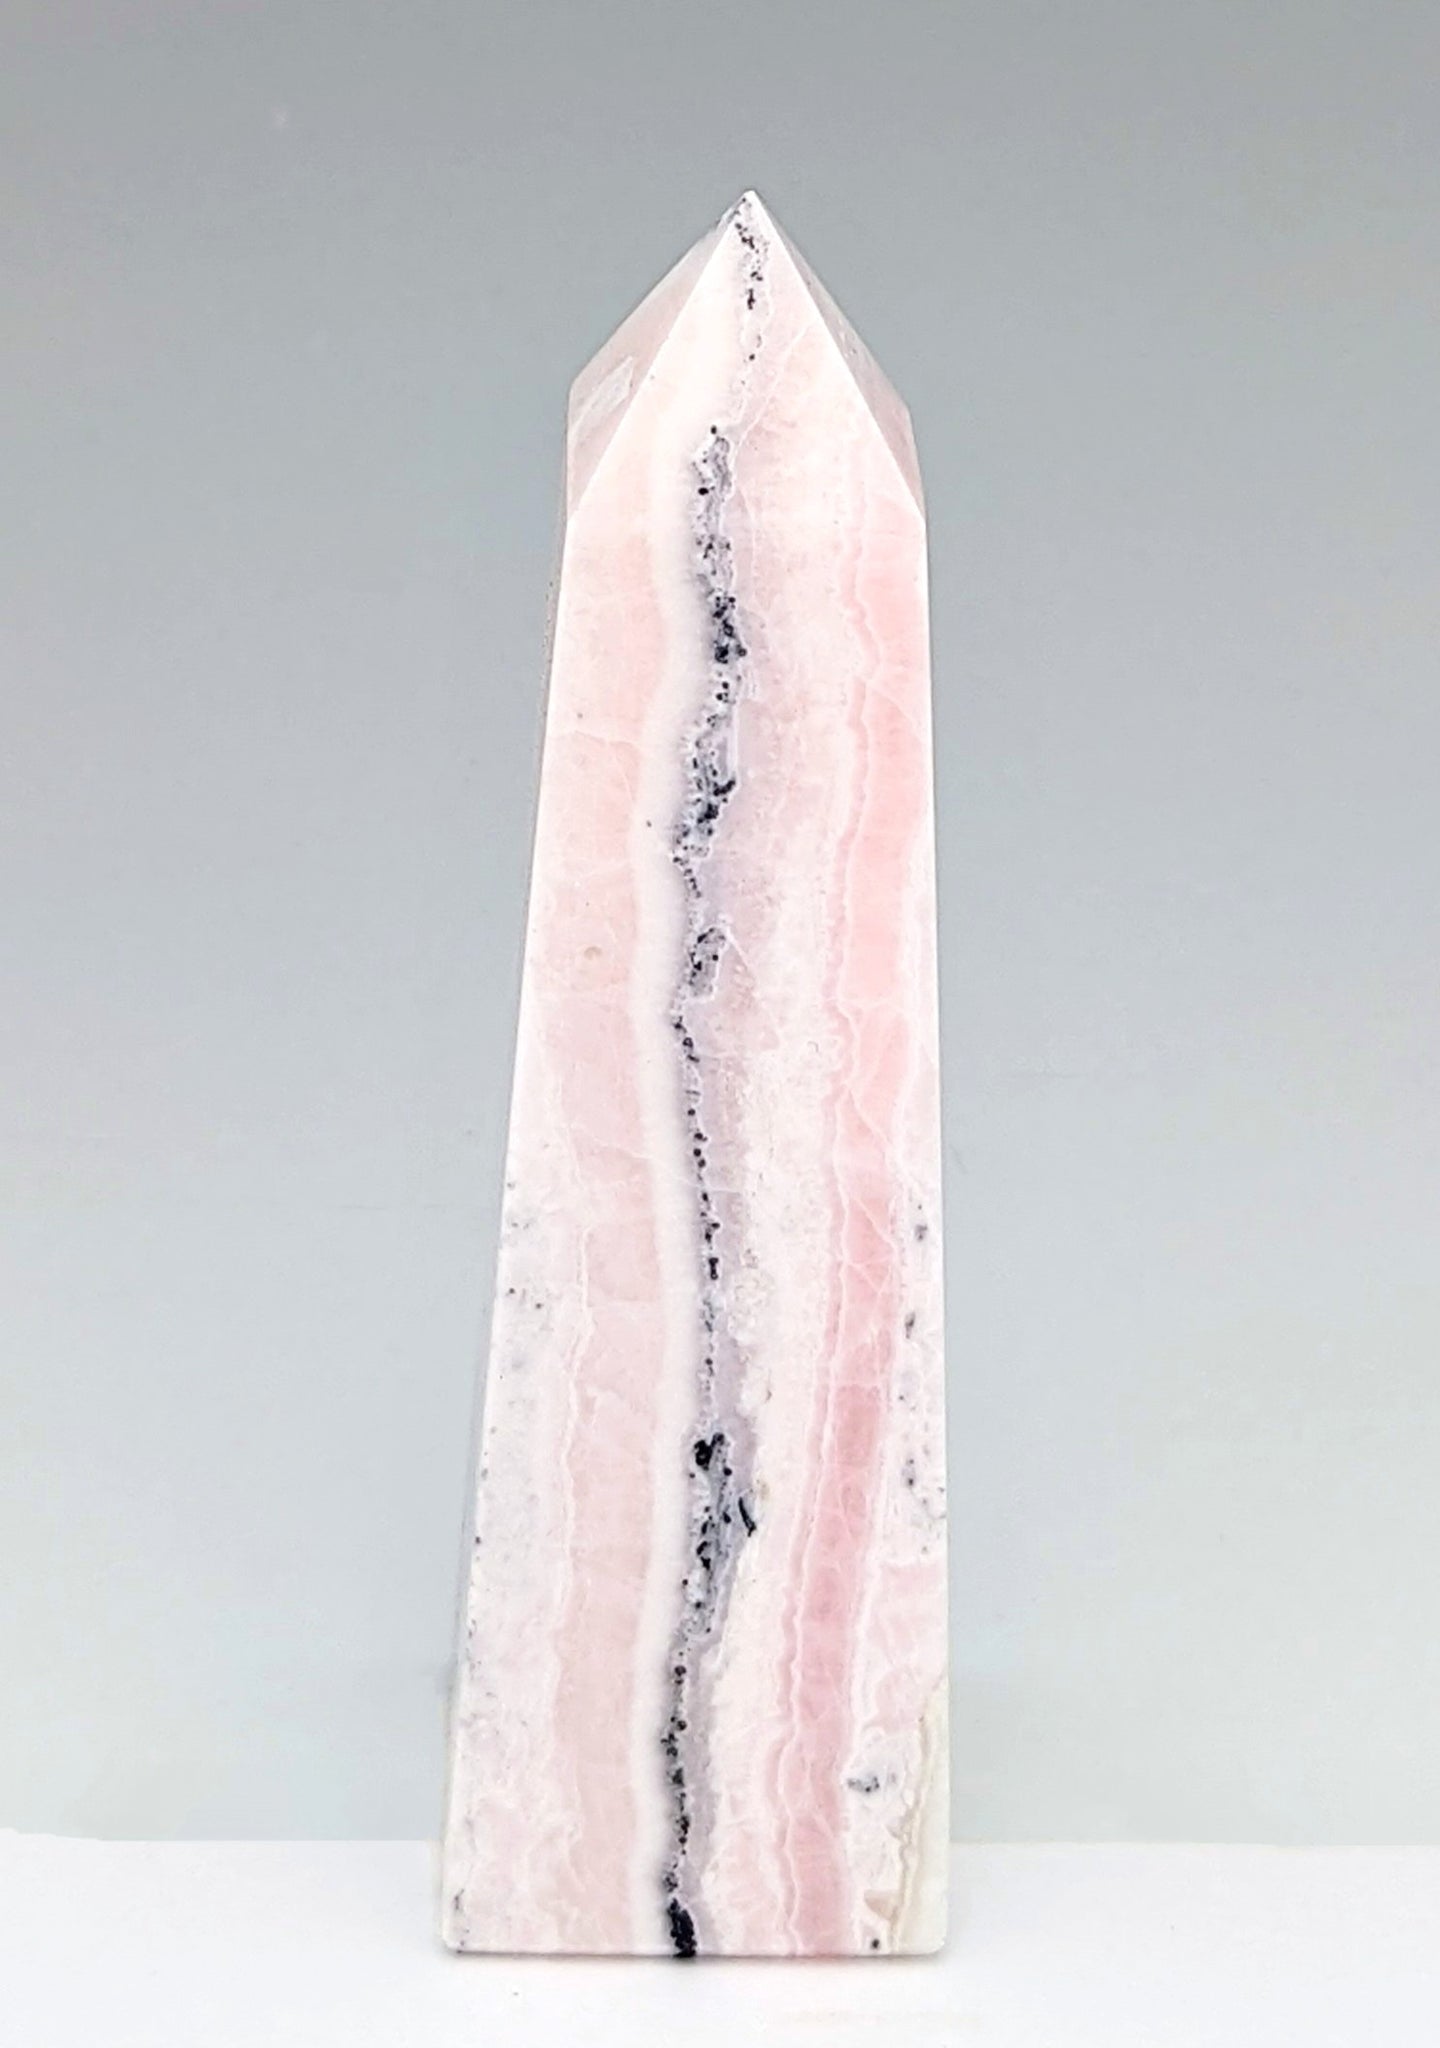 Pink Mangano Calcite Fluorescing Obelisk 